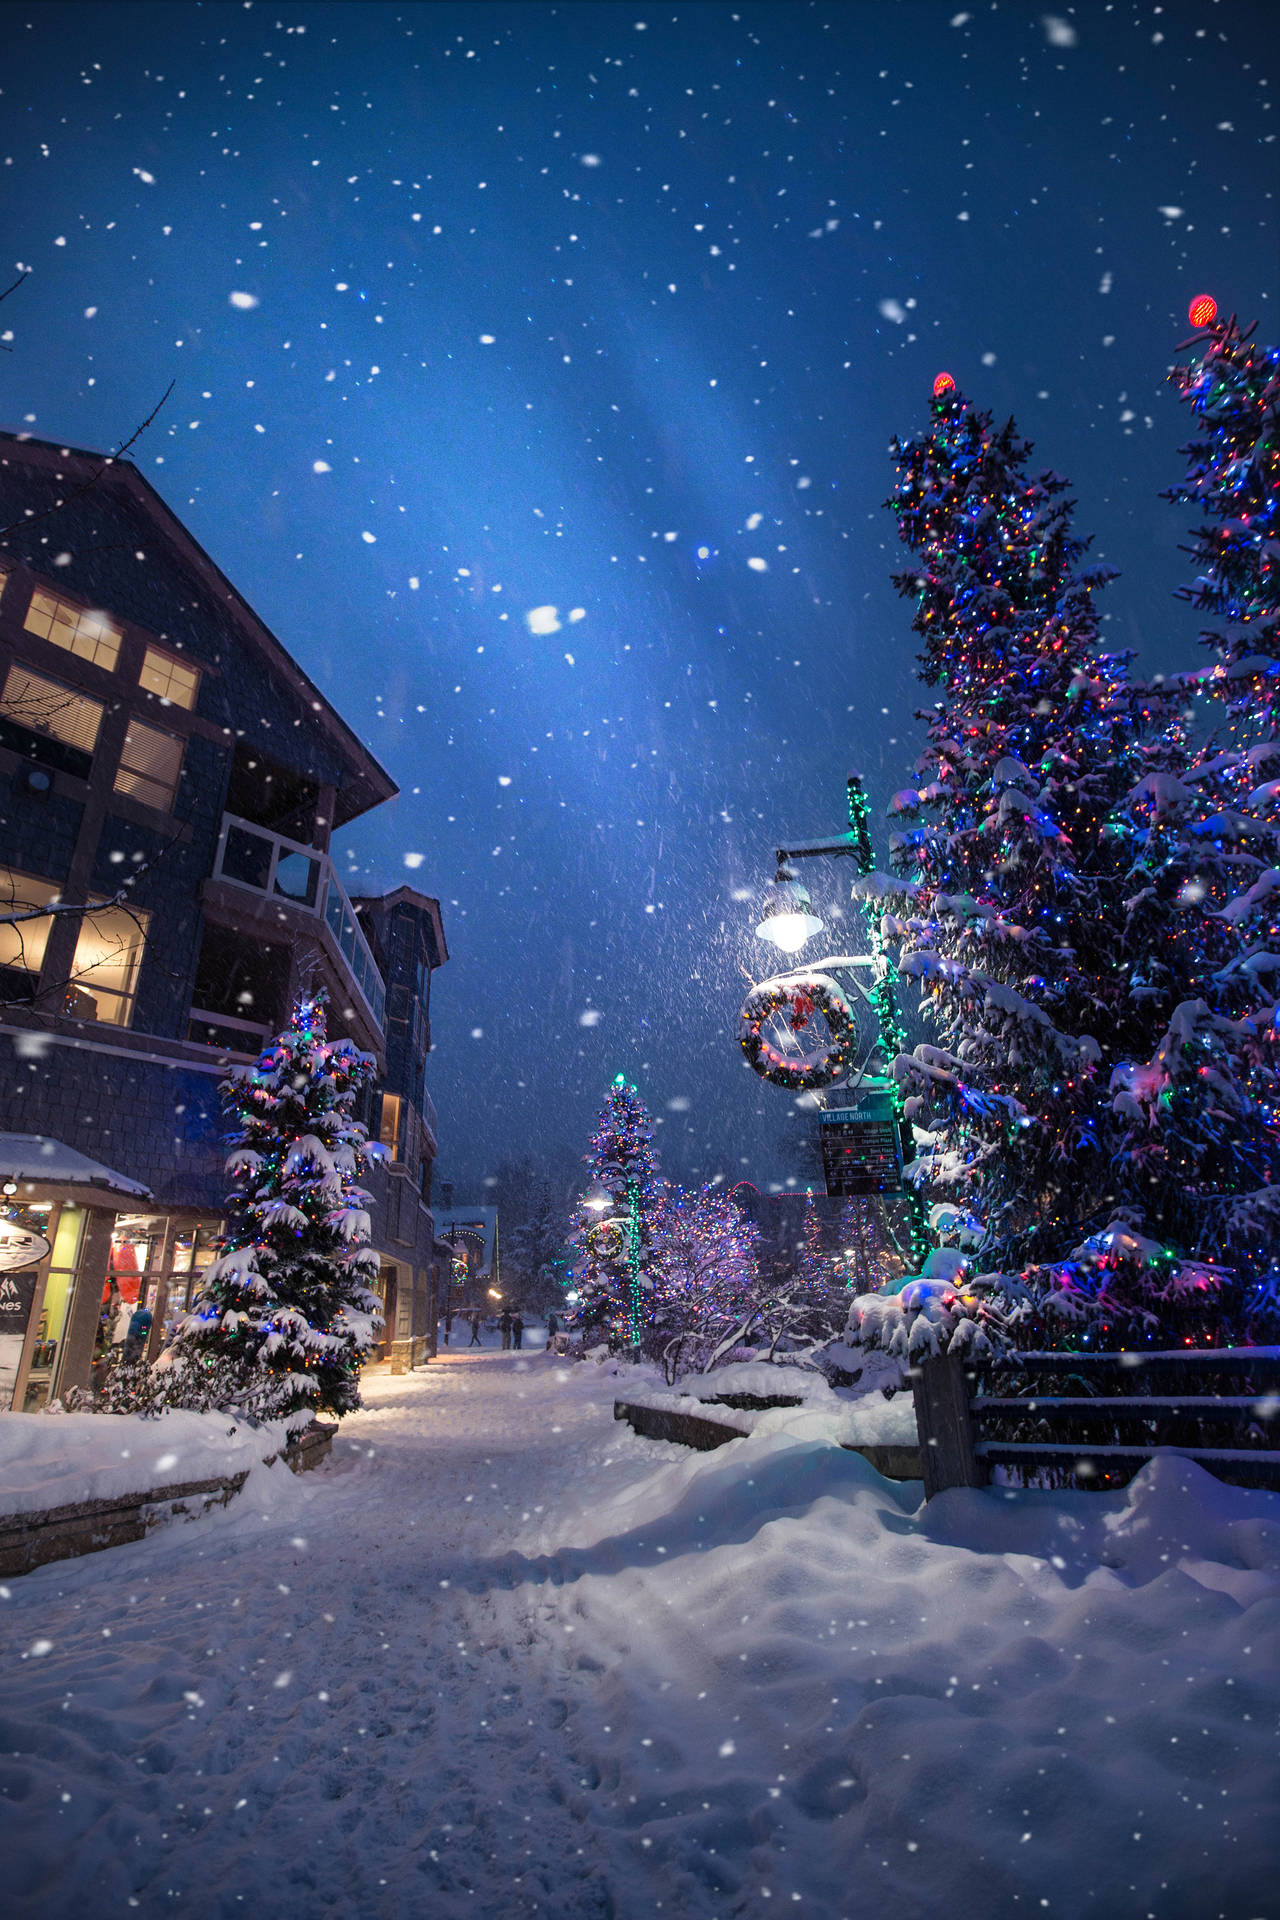 Snowy Christmas Village Background